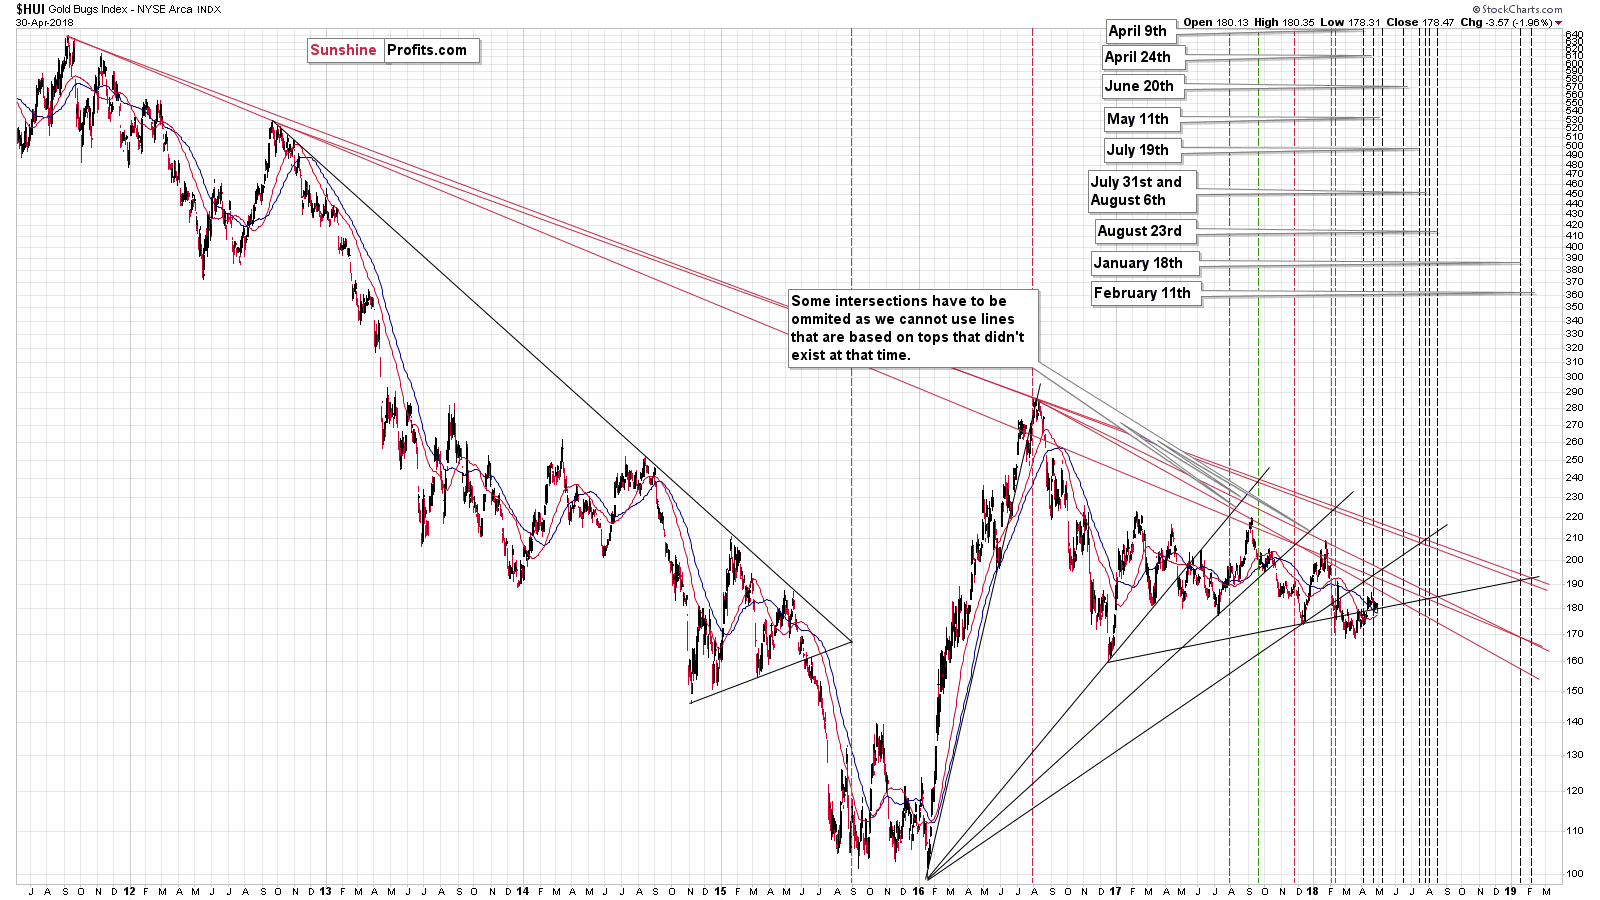 Triangle apex reversal - gold stocks